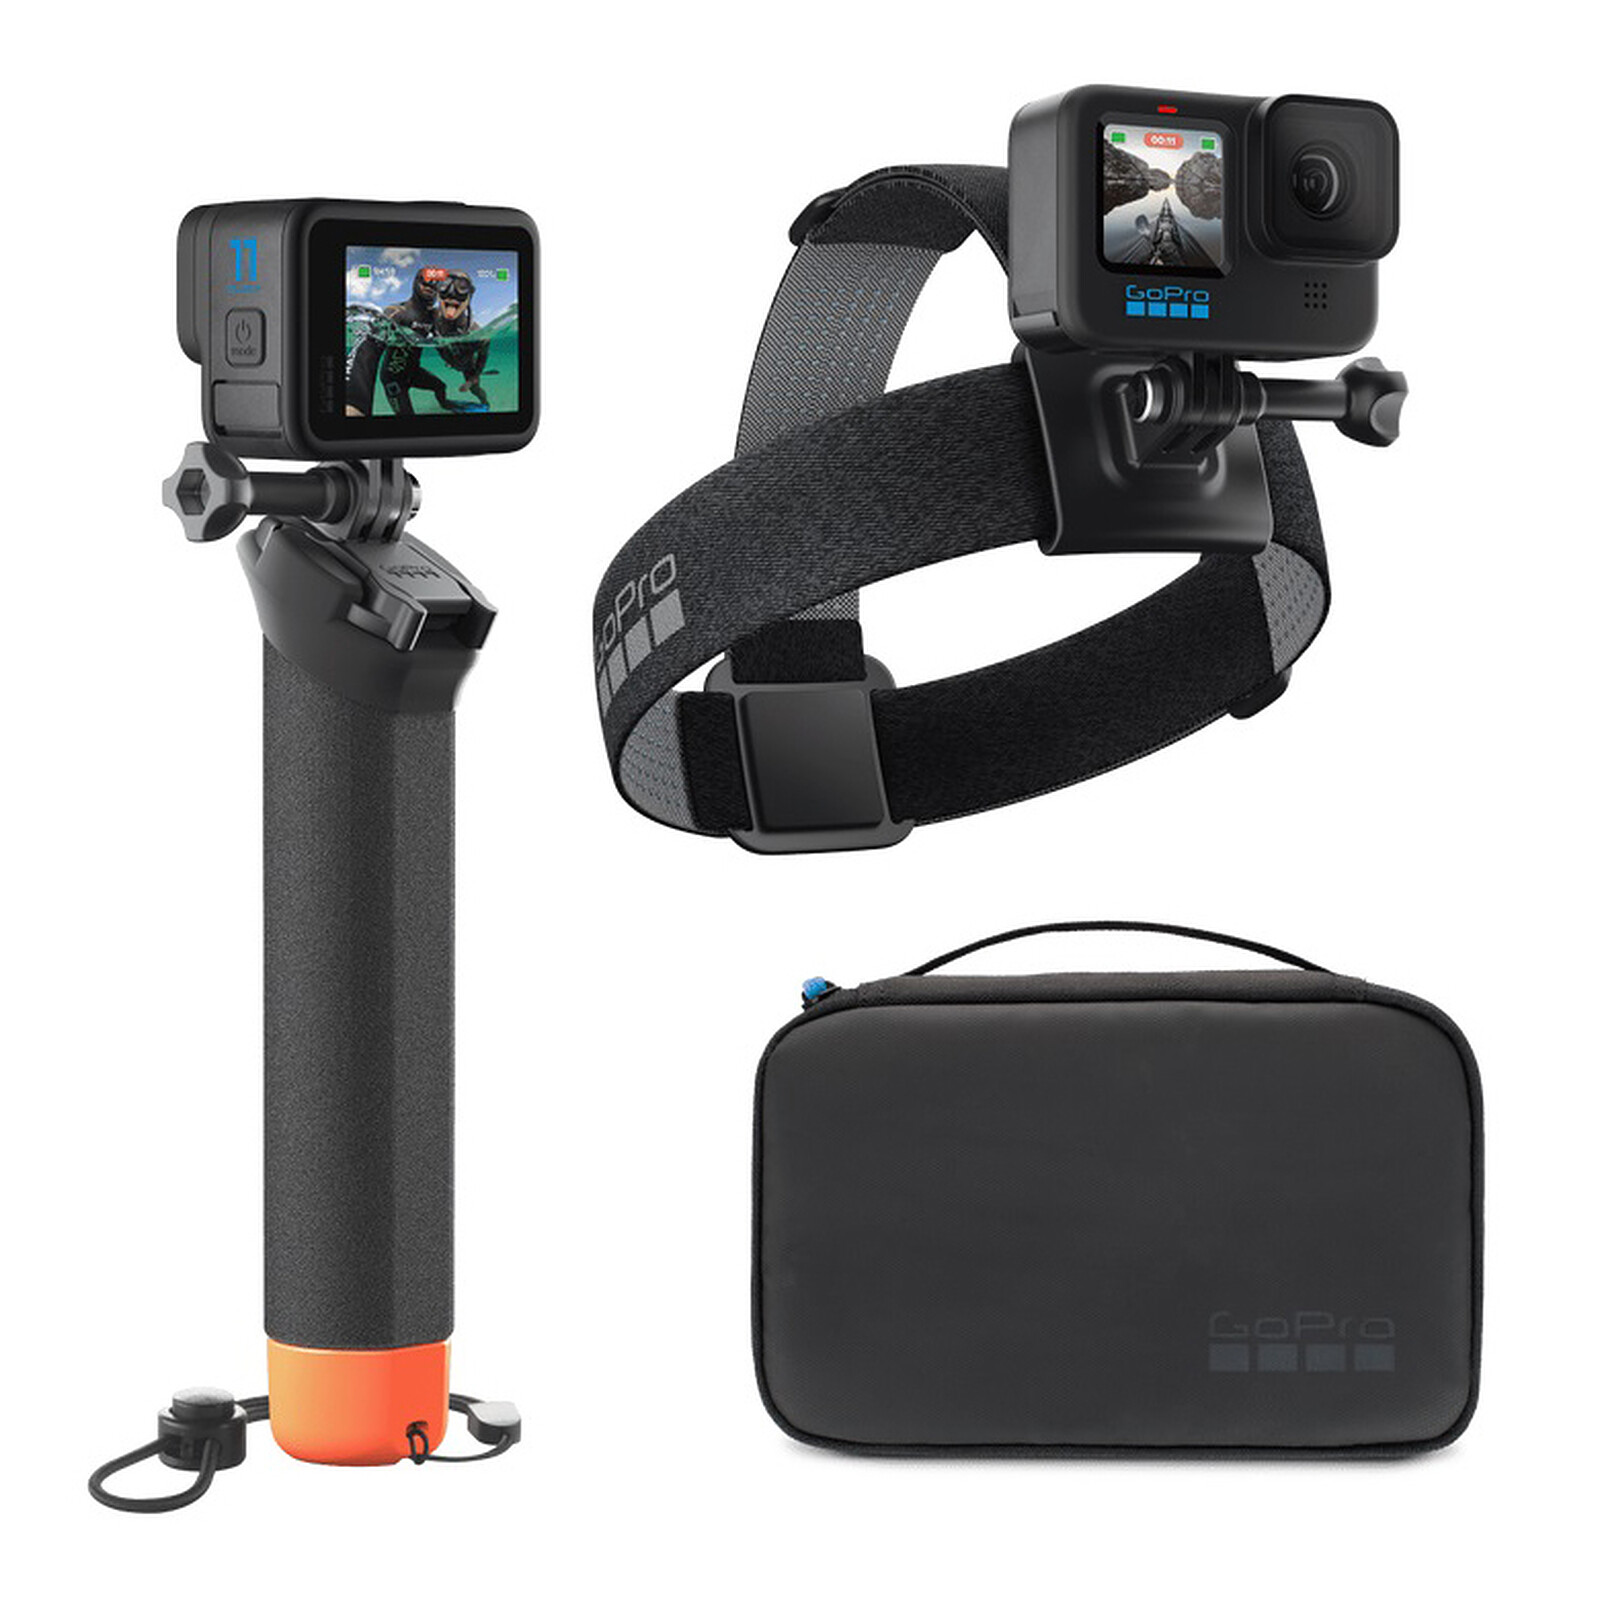 GoPro Adventure Kit 3.0 - Action camcorder accessories - LDLC 3